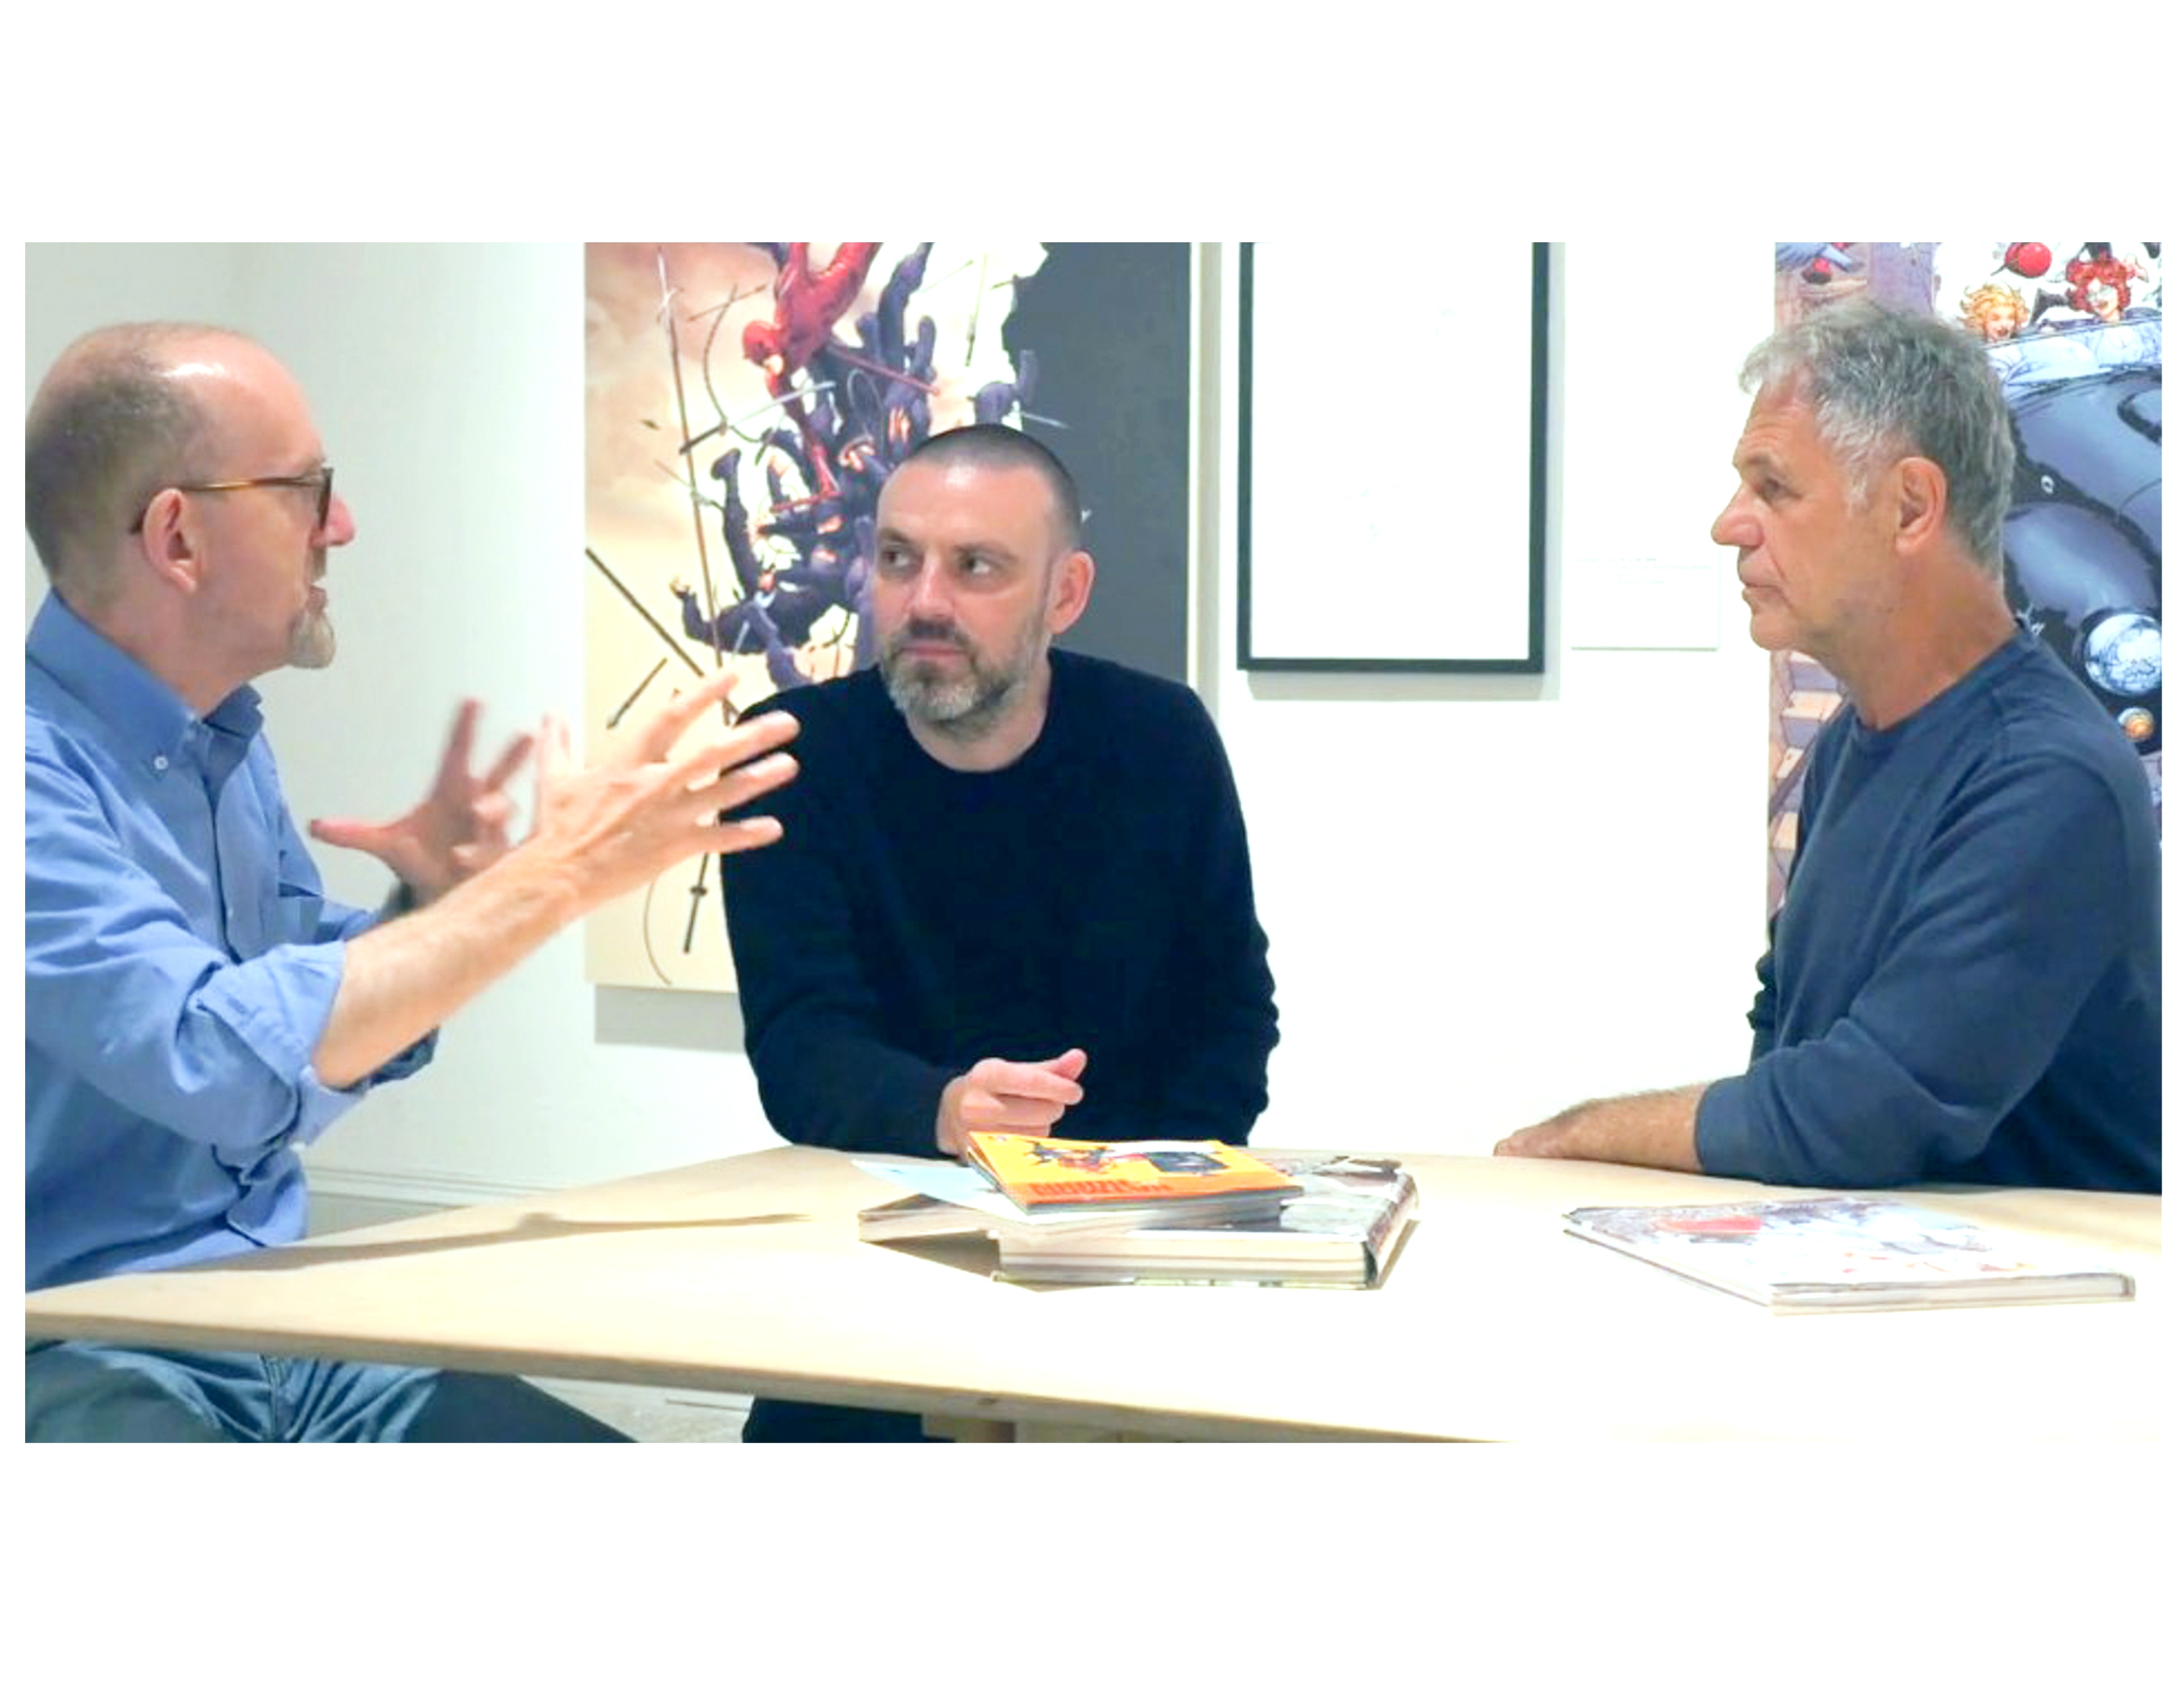 Frank Quitely Meets Karl Gnass Interview at the Kelvingrove Art Center in Glasgow, Scotland